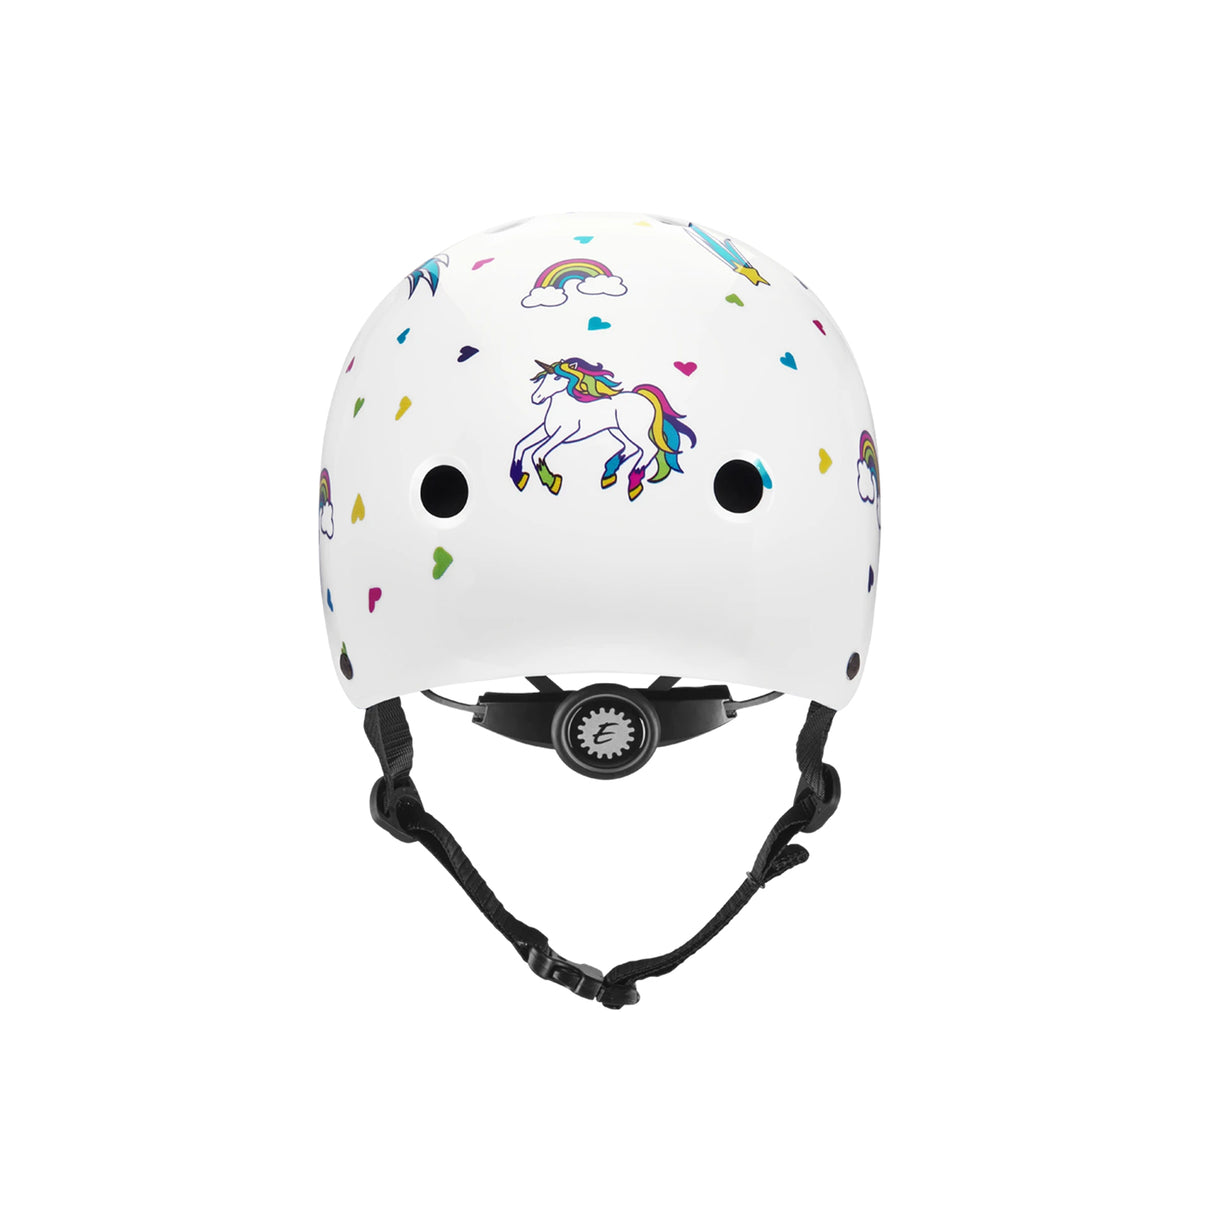 Electra Unicorn Lifestyle Bike Helmet